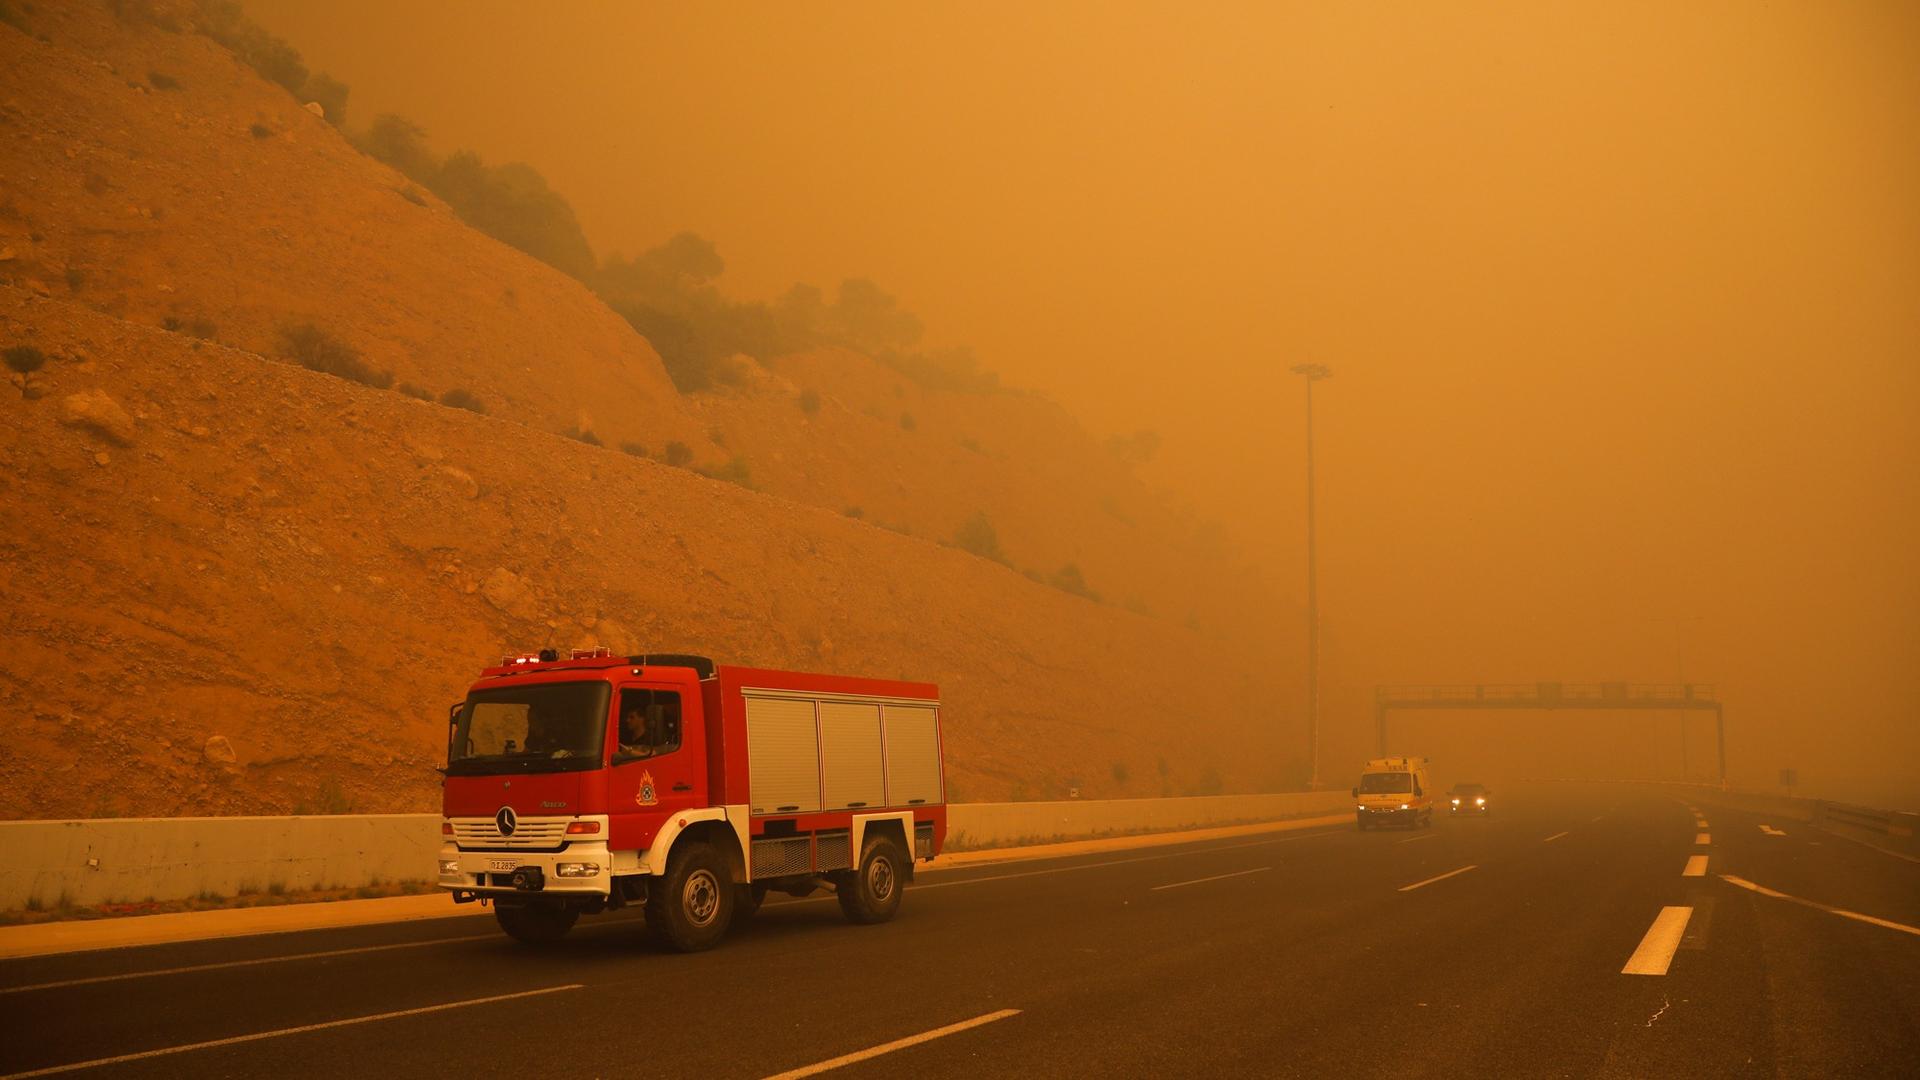 A fire truck drives along a road in Greece amid orange smoke.